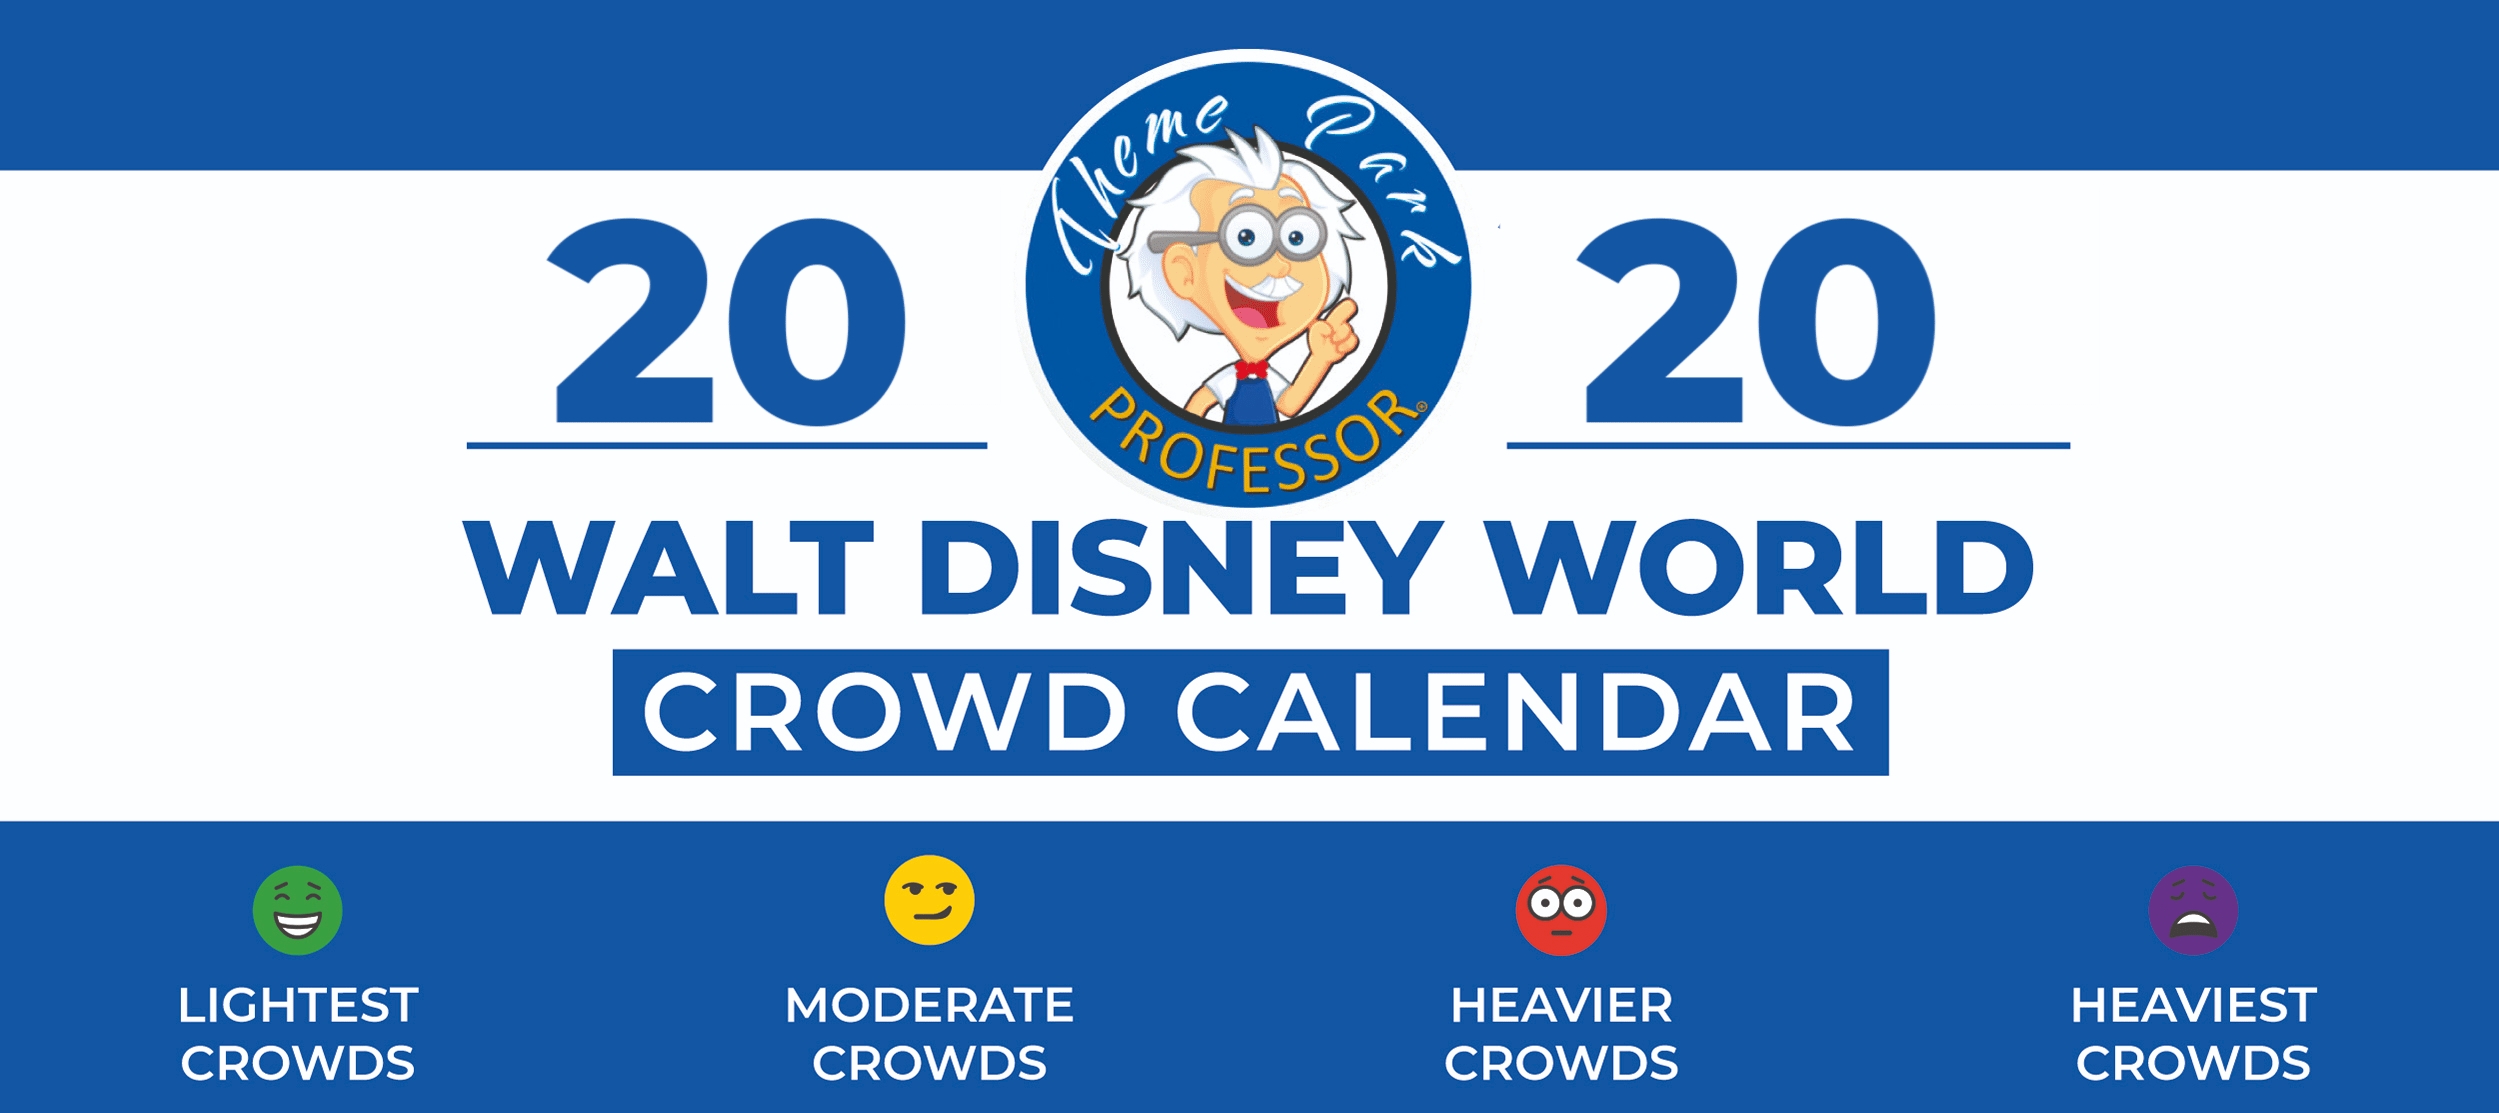 Universal Orlando Crowd Calendar 2021 January : About Us Our Blog 2019 December Orlando Crowd Disney World Crowd Calendar June 2021